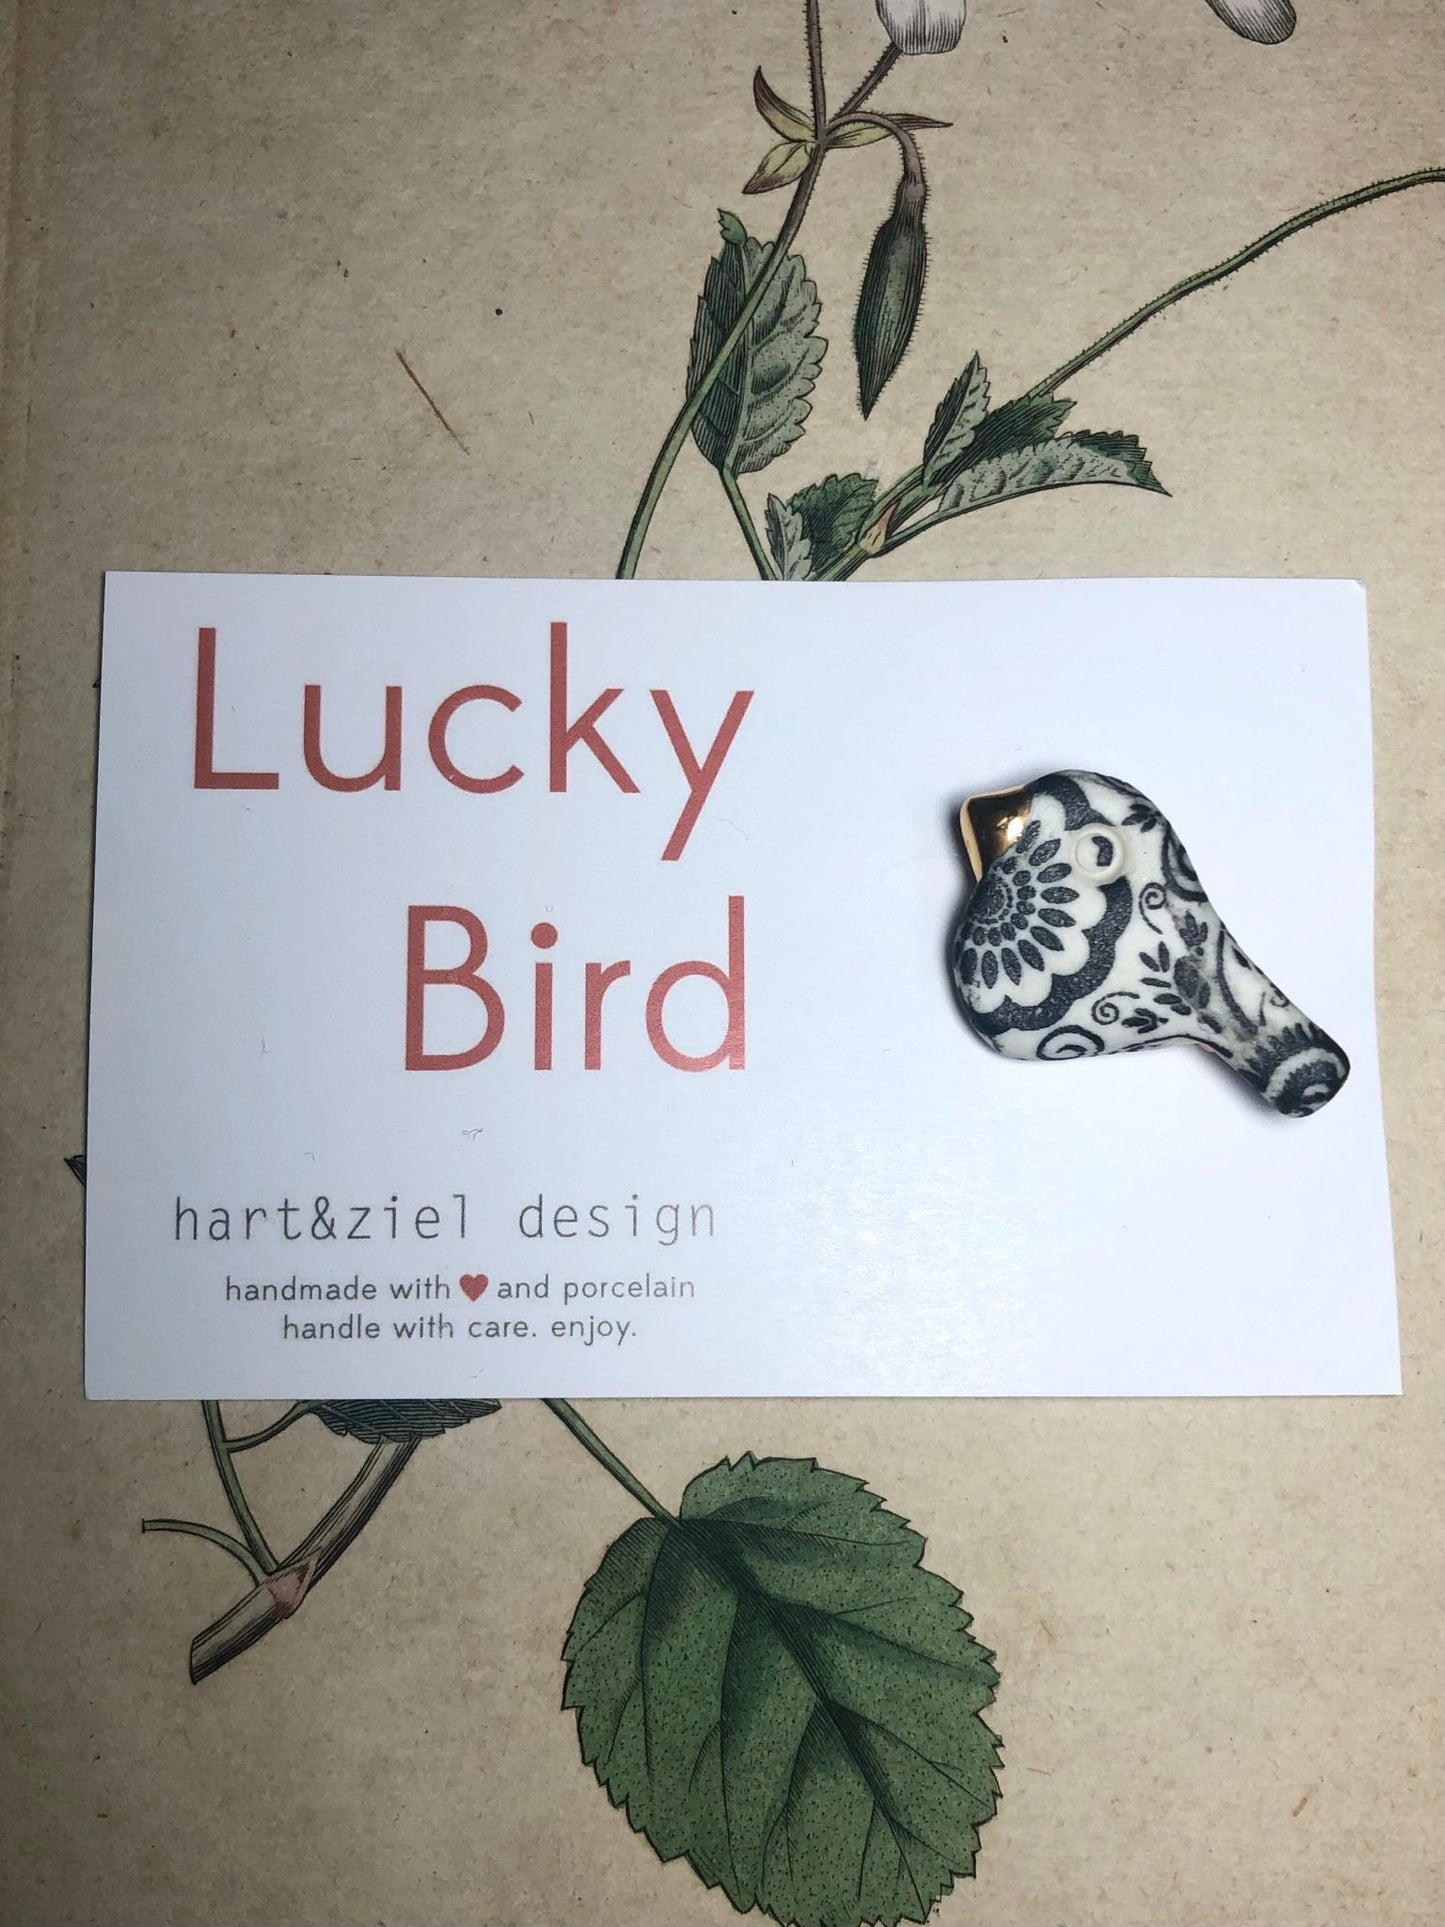 Lucky Bird - Erika black - hart&ziel design